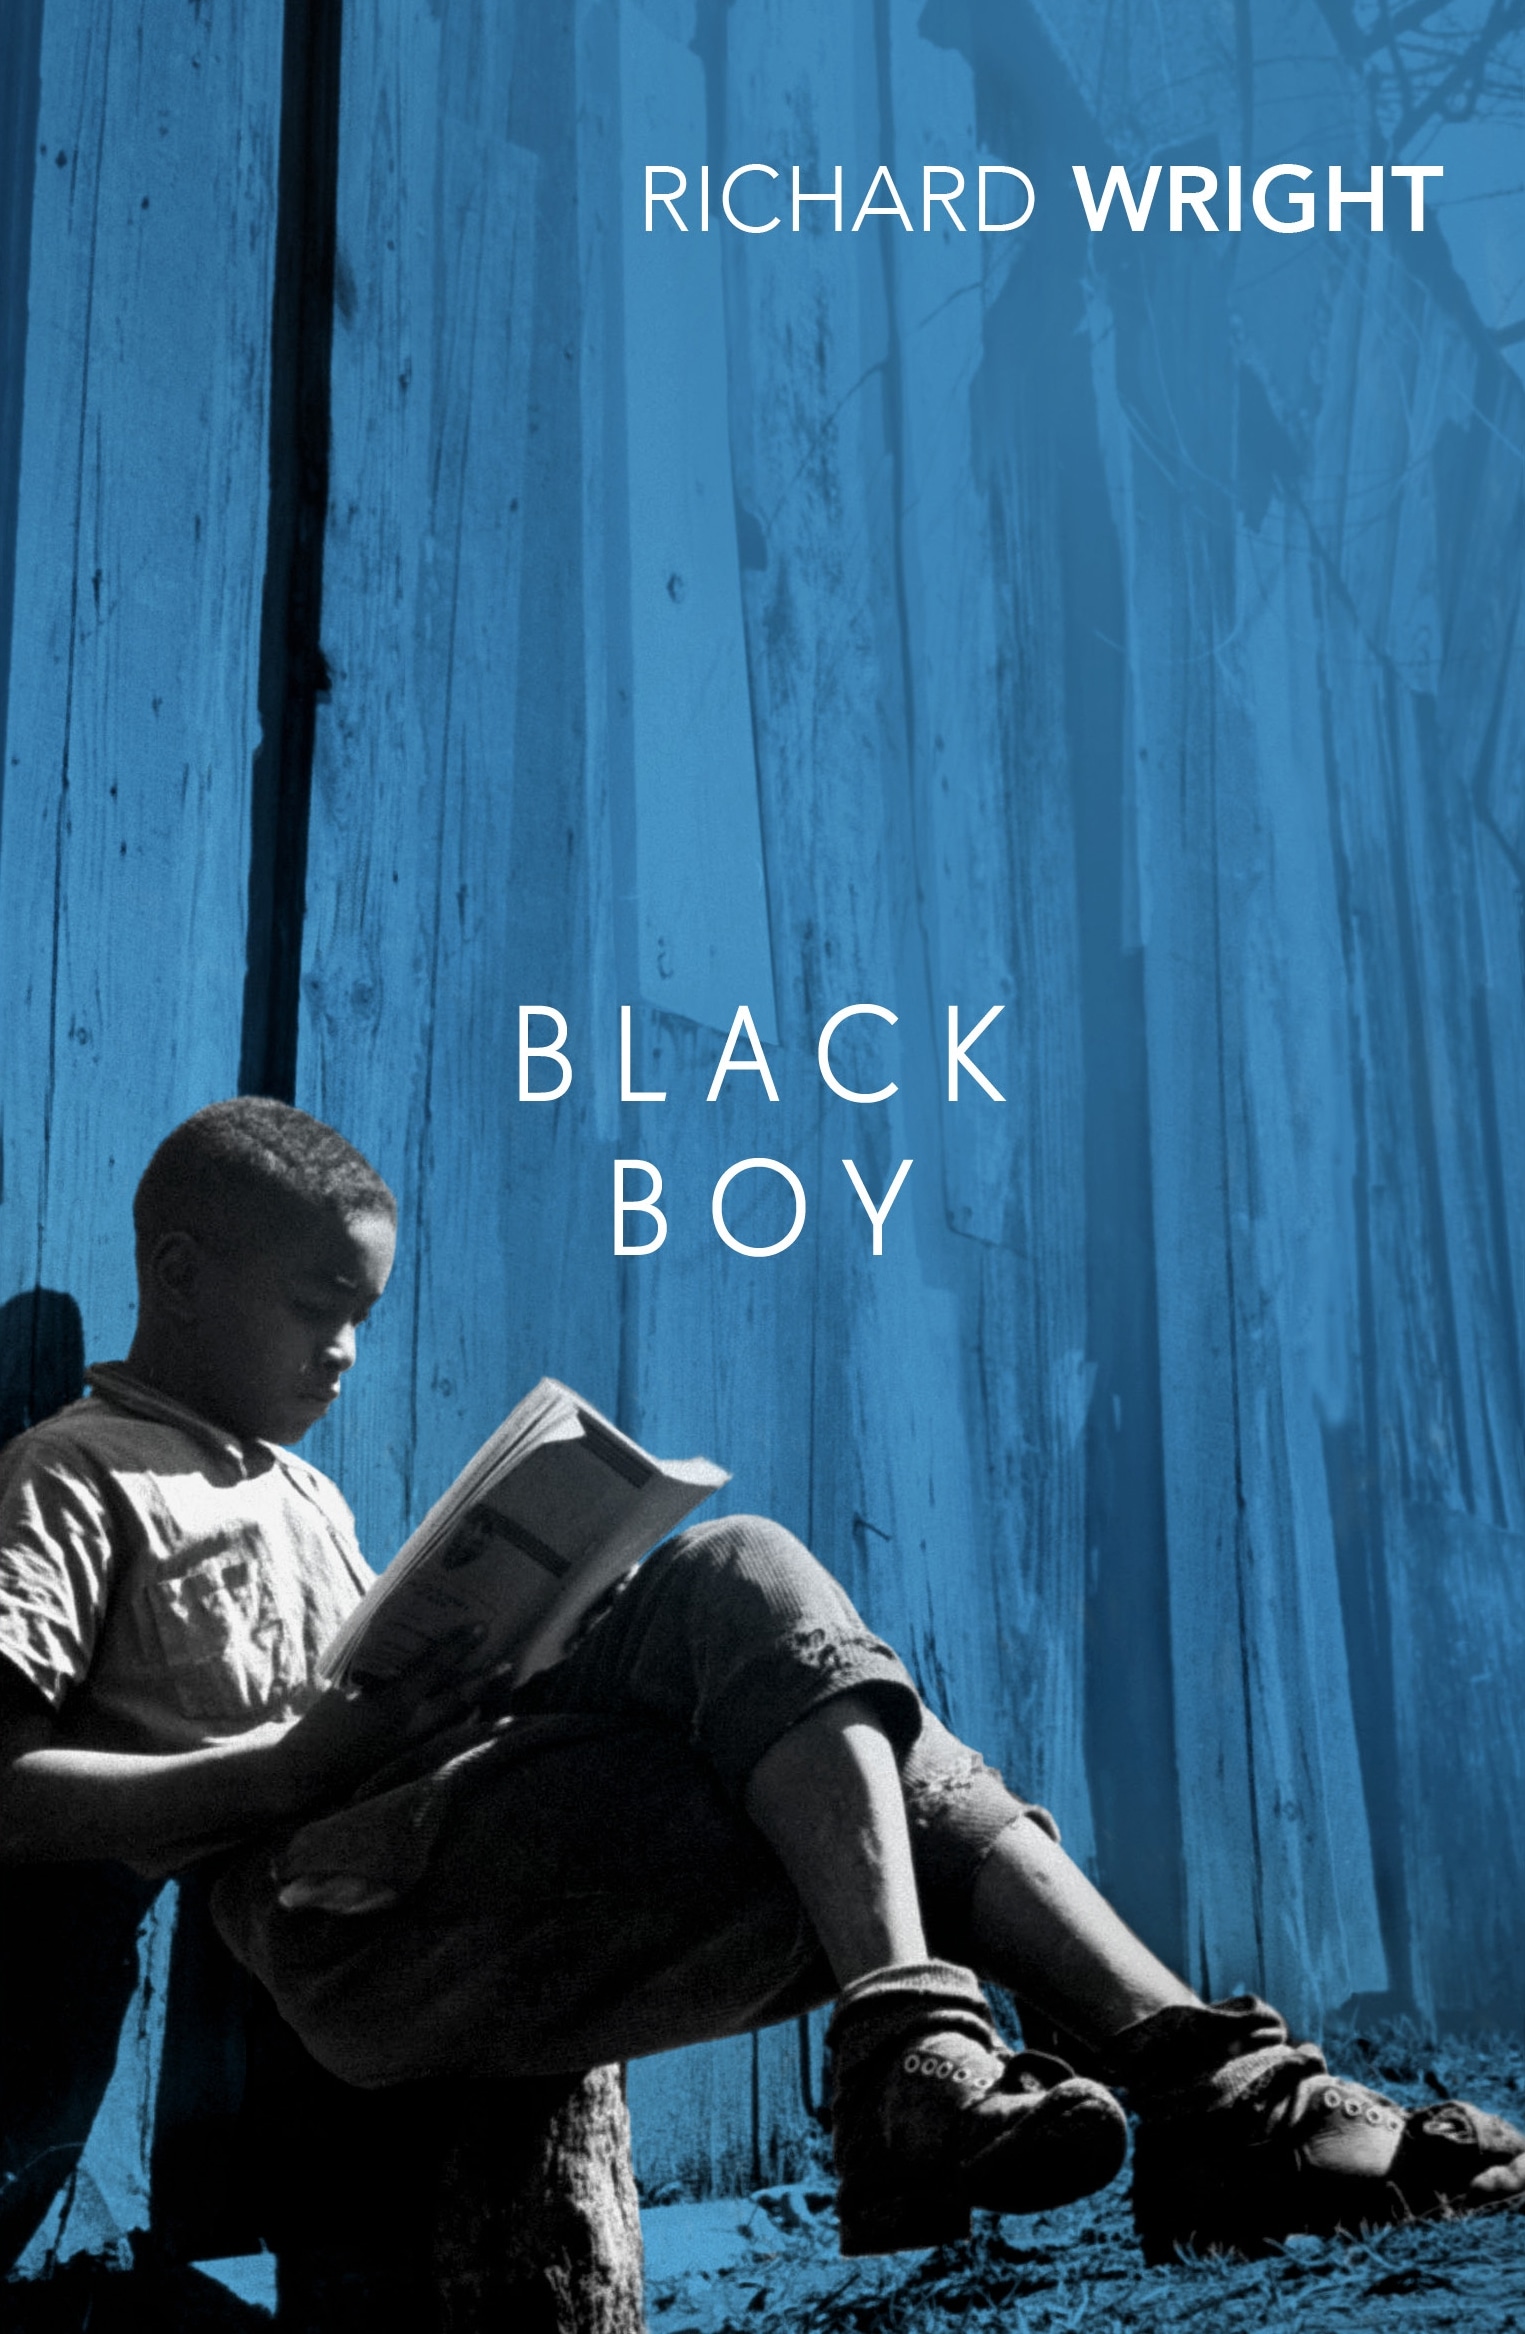 Book “Black Boy” by Richard Wright — October 1, 2020